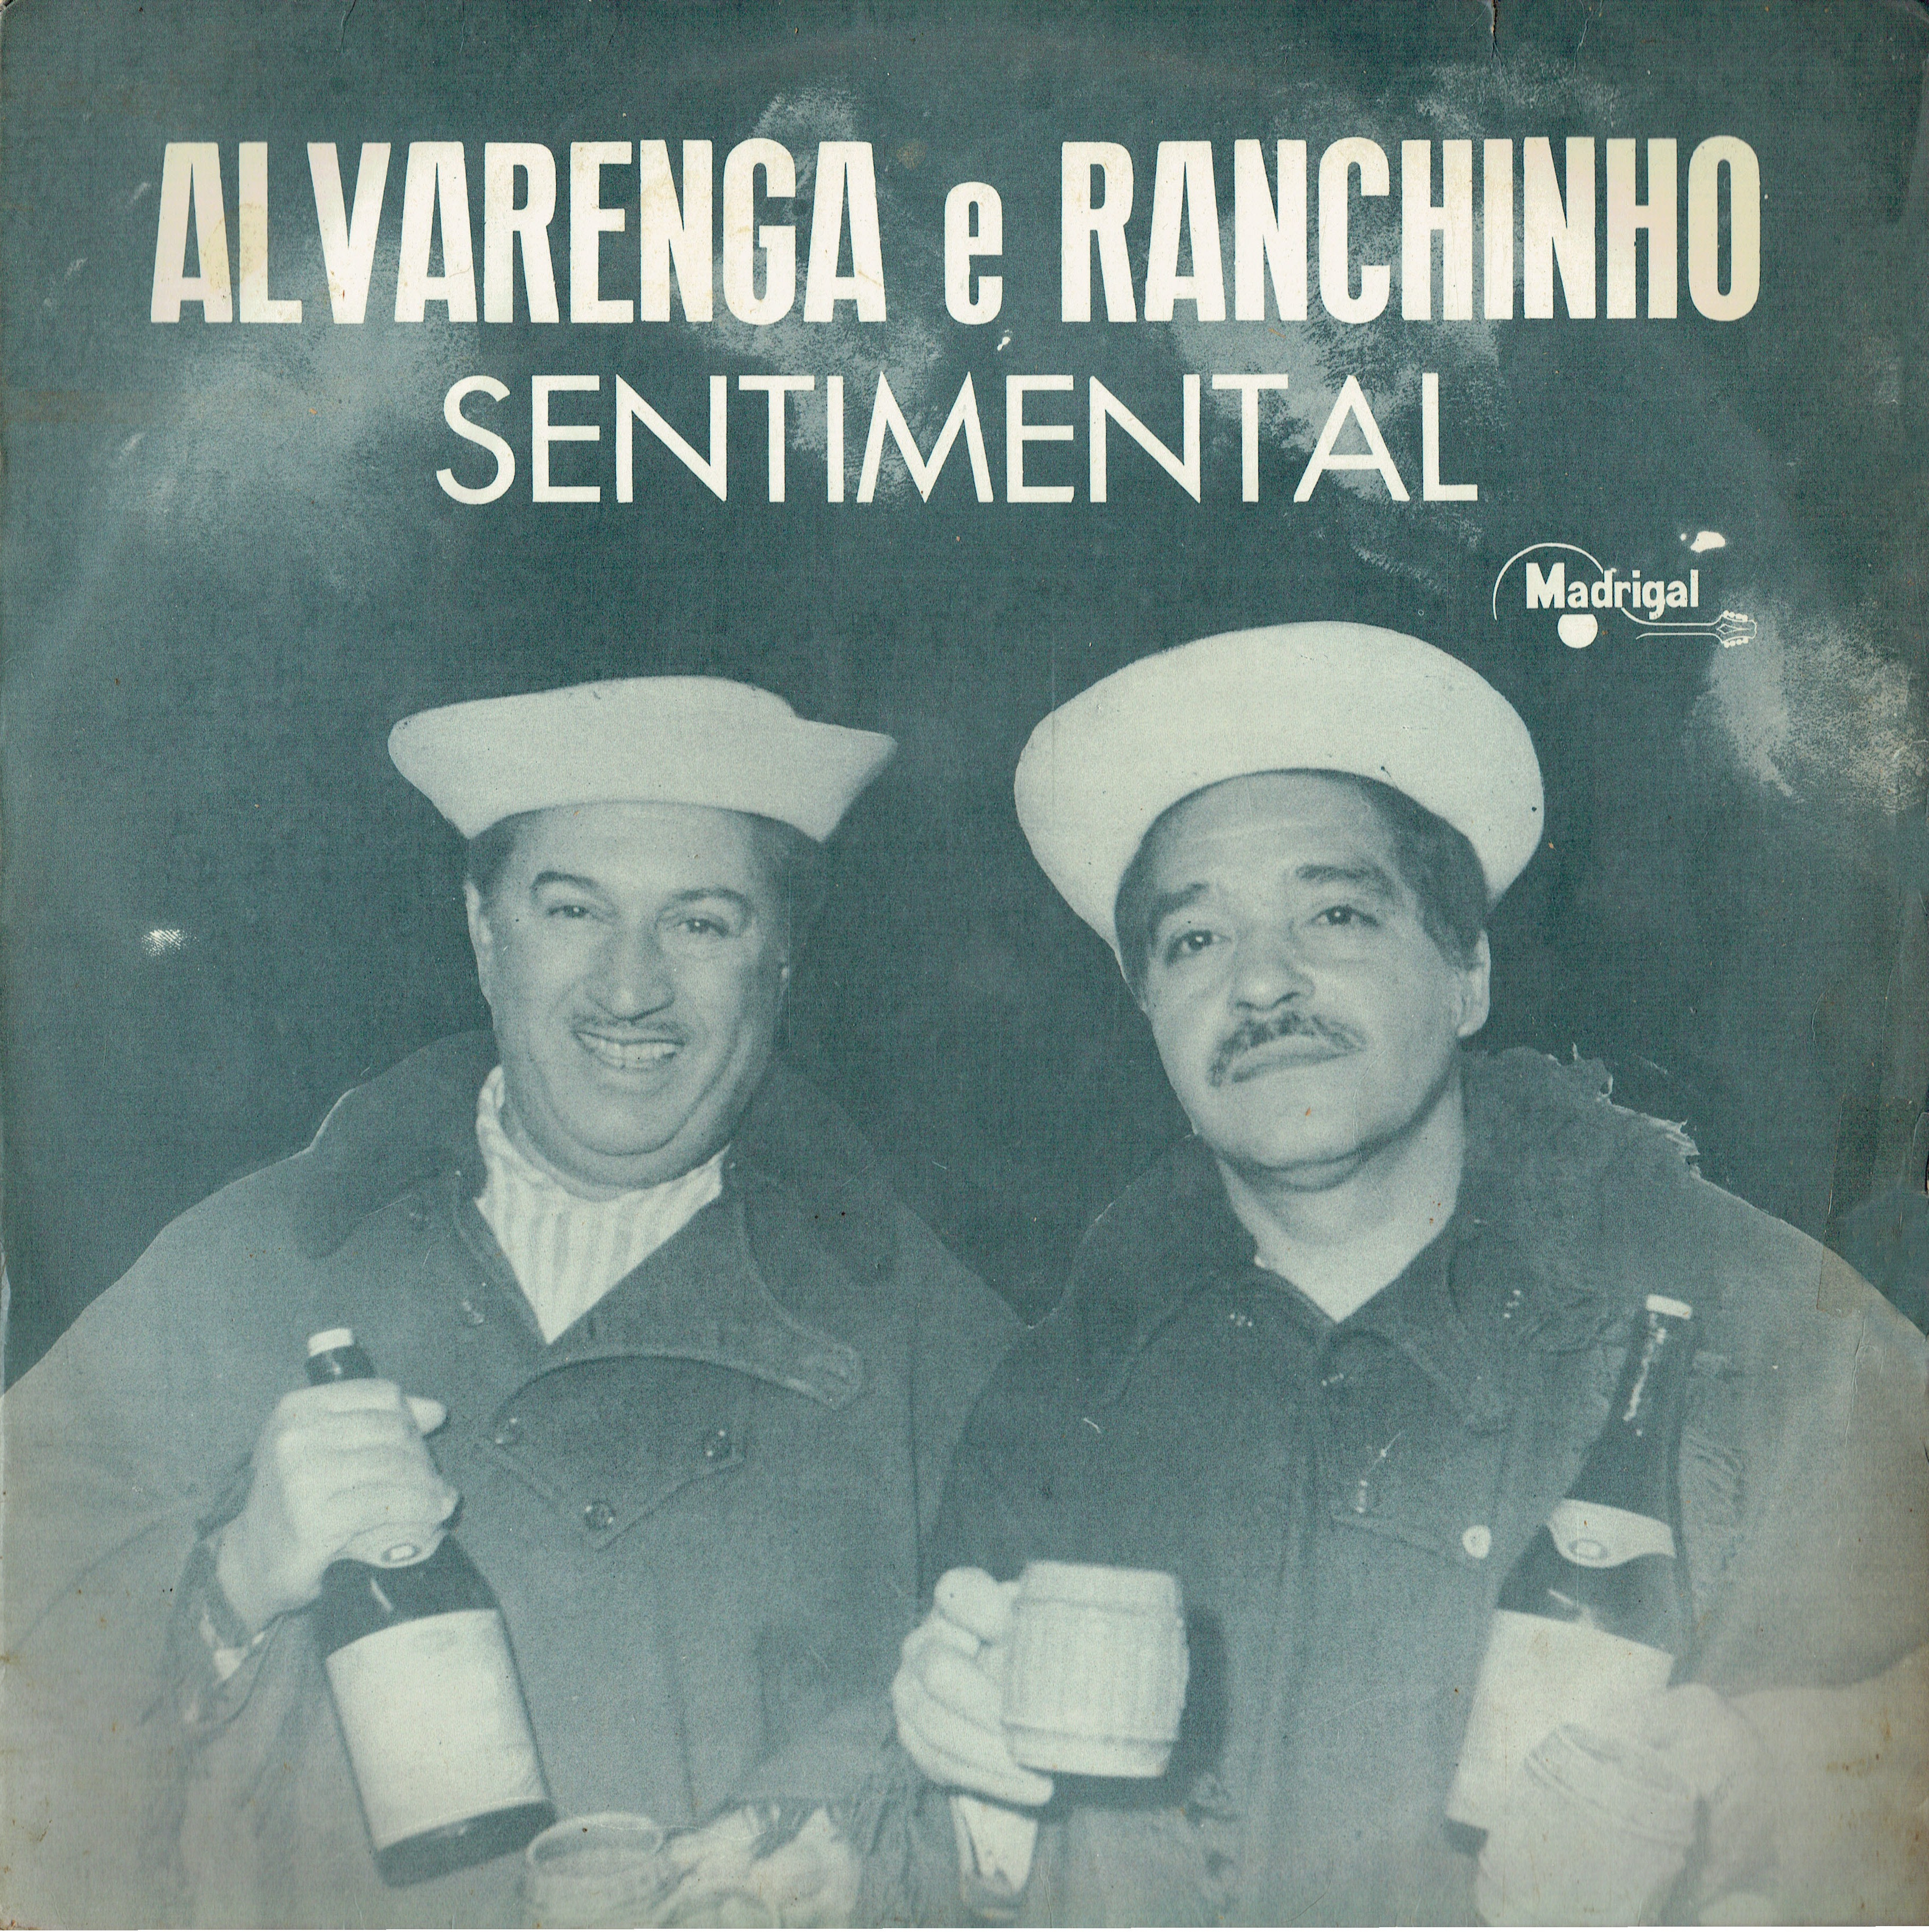 Alvarenga Ranchinho Segundo - sentimental